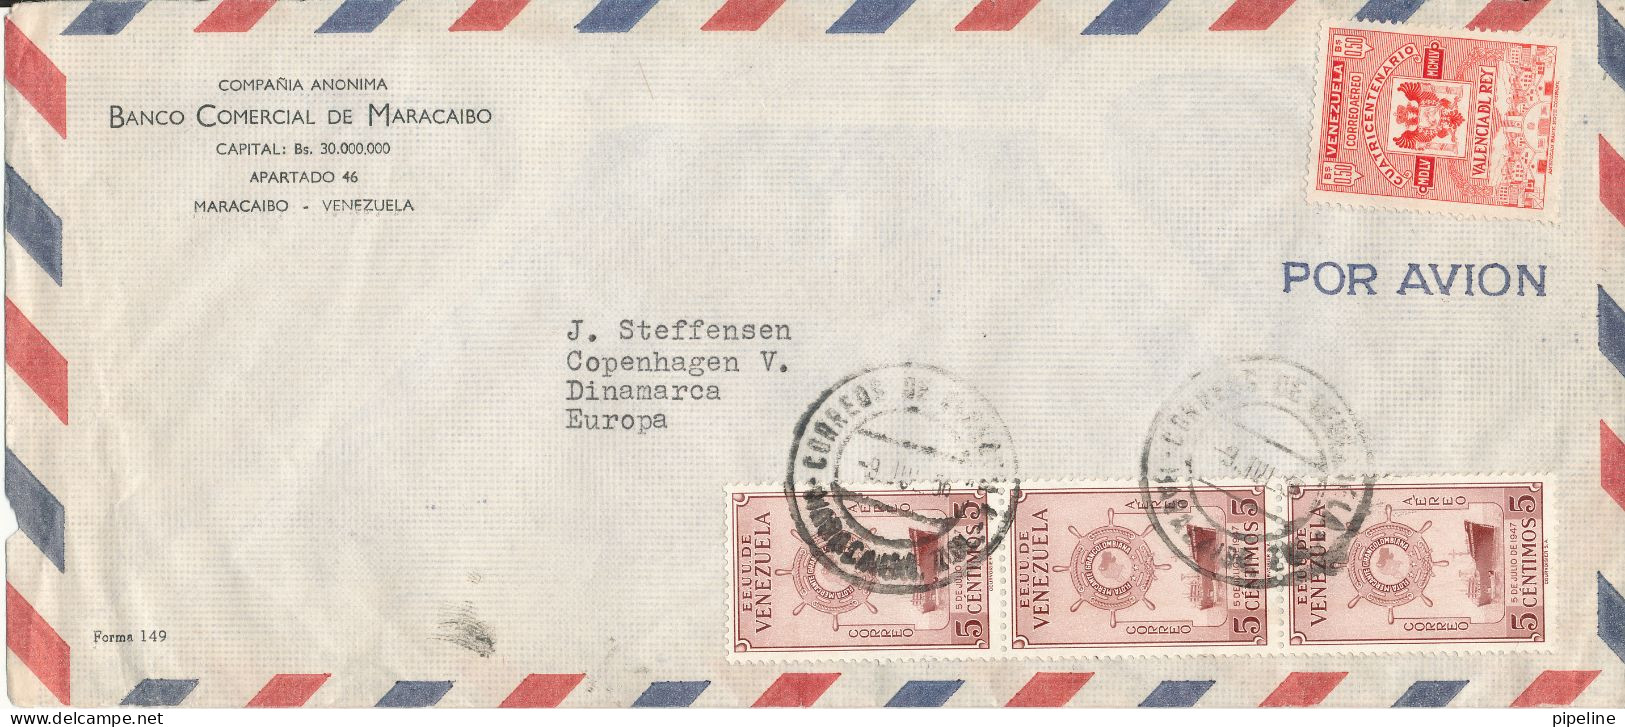 Venezuela Air Mail Bank Cover Sent To Denmark 9-7-1956 - Venezuela